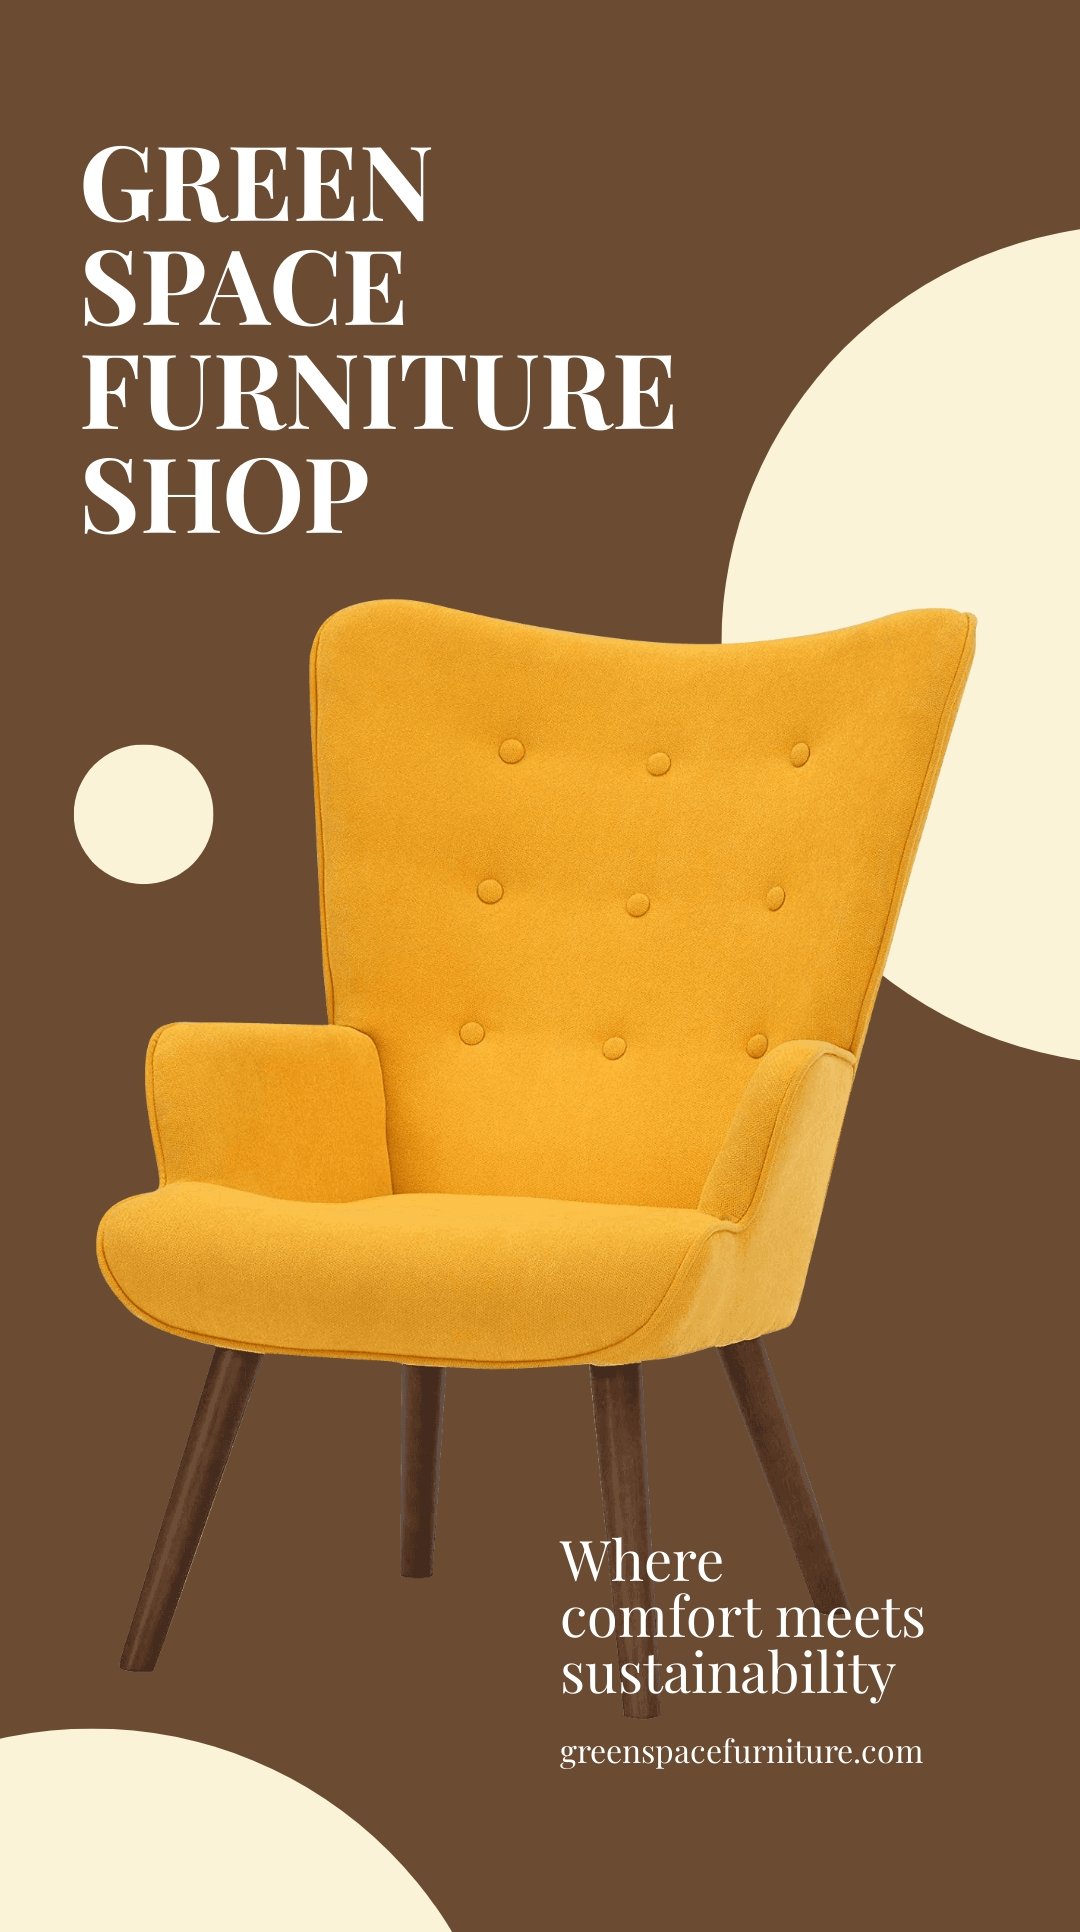 Free Online Furniture Shop WhatsApp Post Template